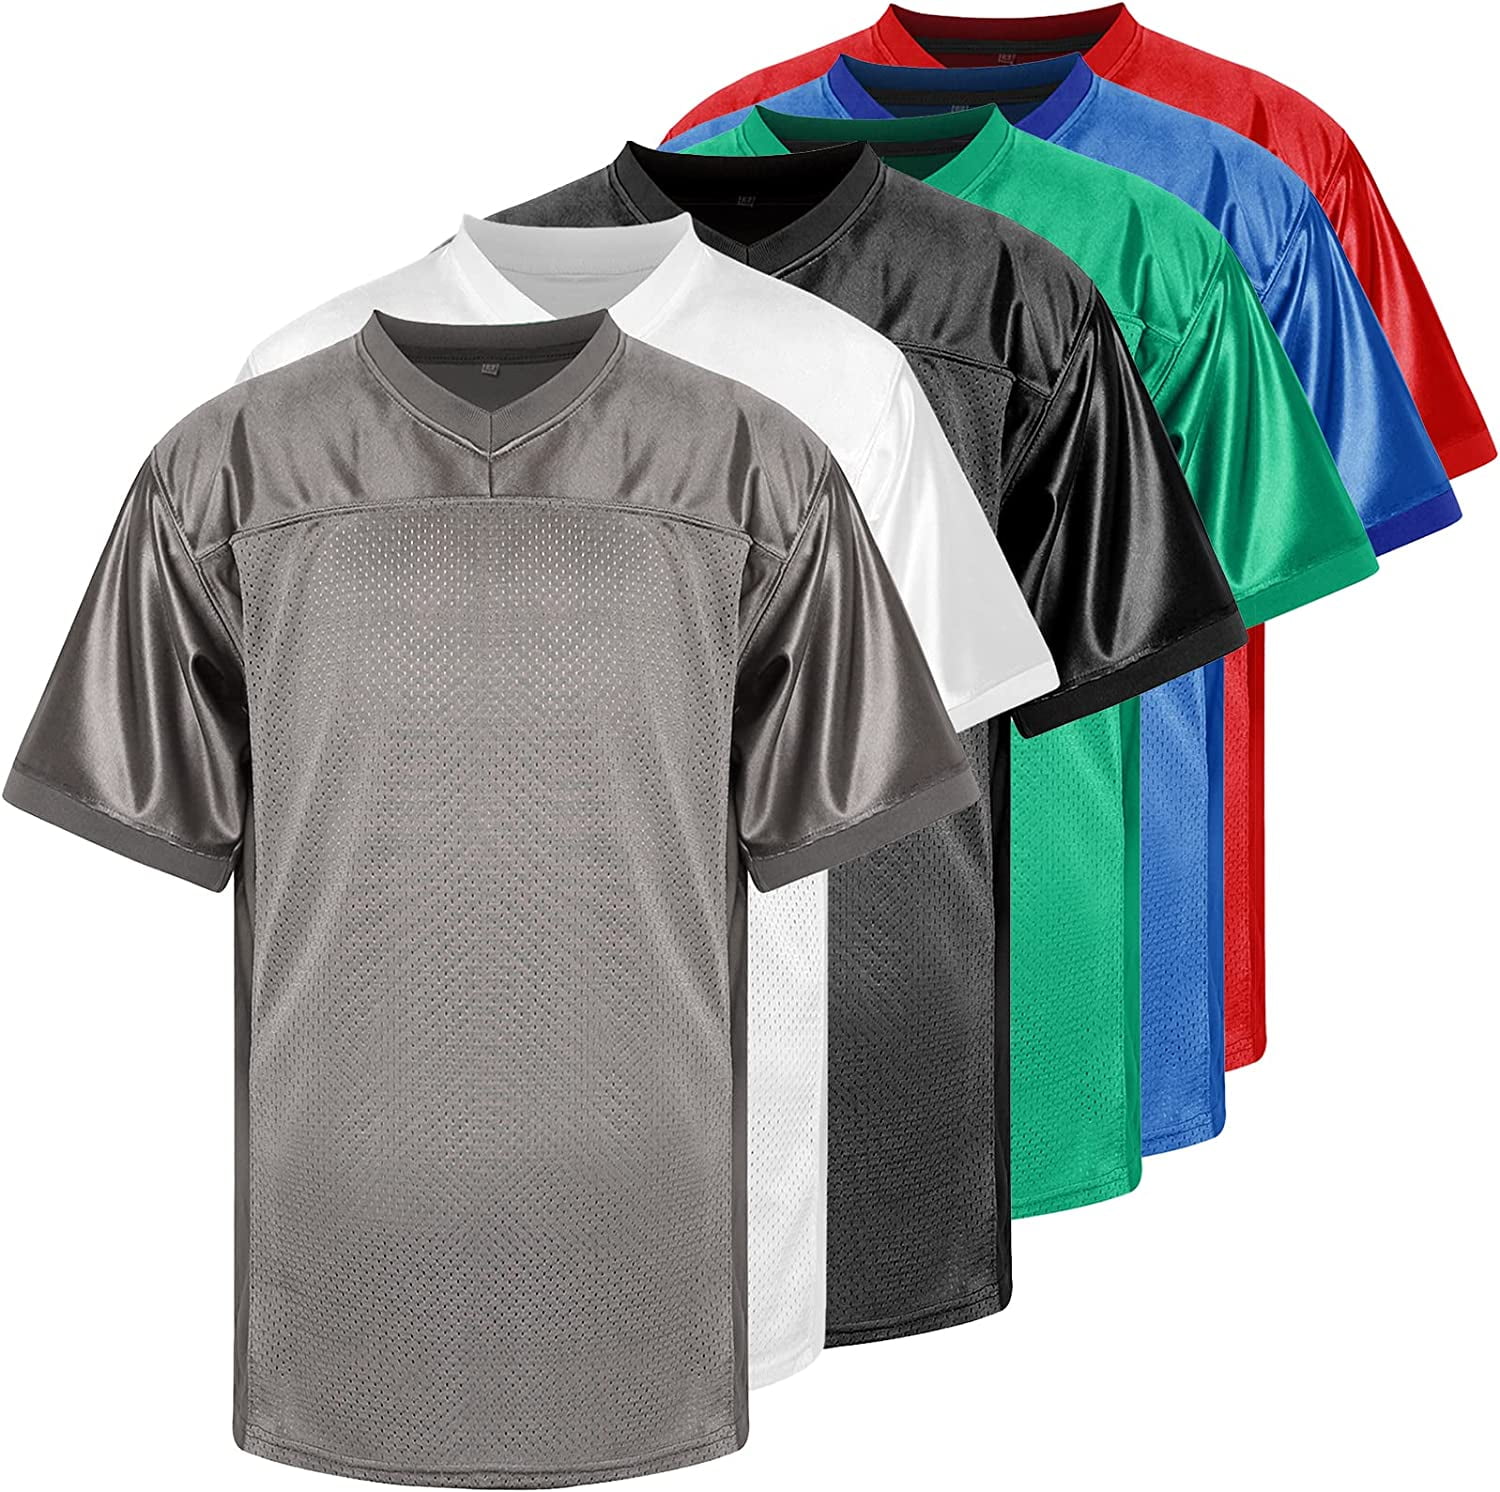  TKJPYWYH Blank Football Jersey,Men's Practice Jersey Football  Athletic Shirt,Hip Hop Sports Blank T-Shirt S-3XL : Clothing, Shoes 